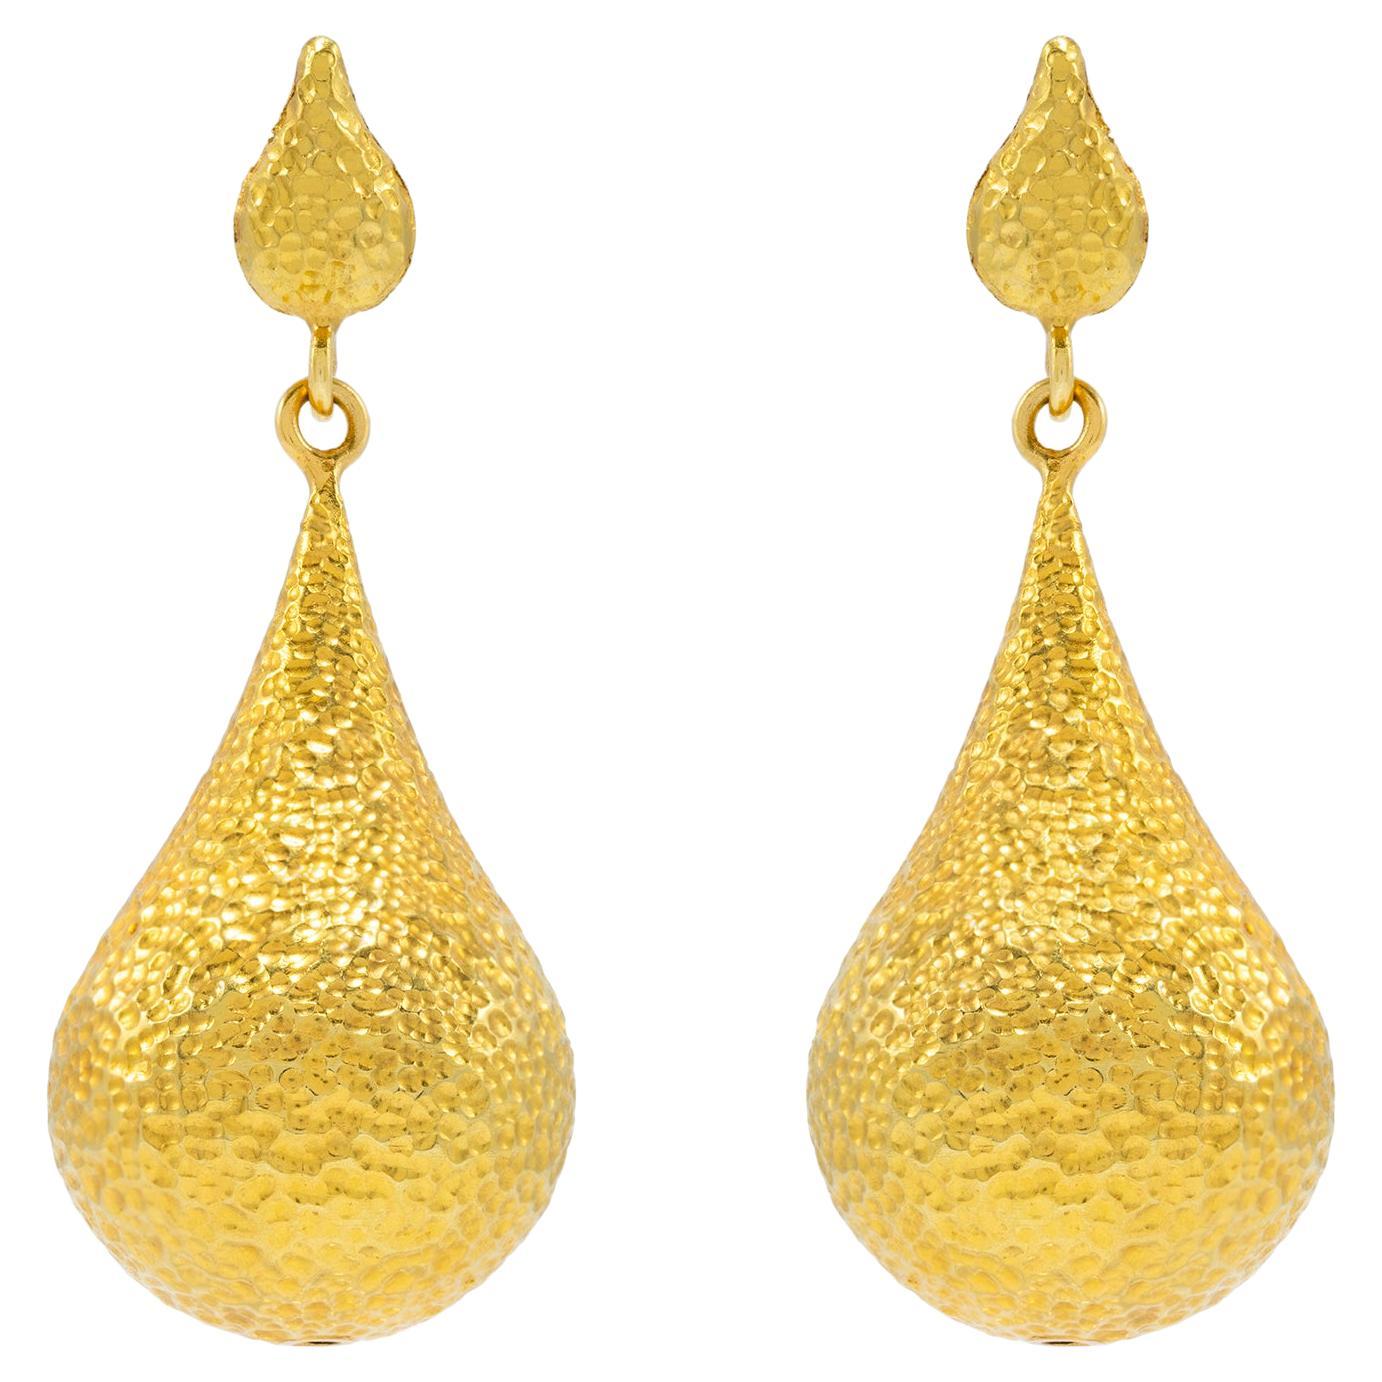 Bali 20k Gold Earrings, by Tagili For Sale